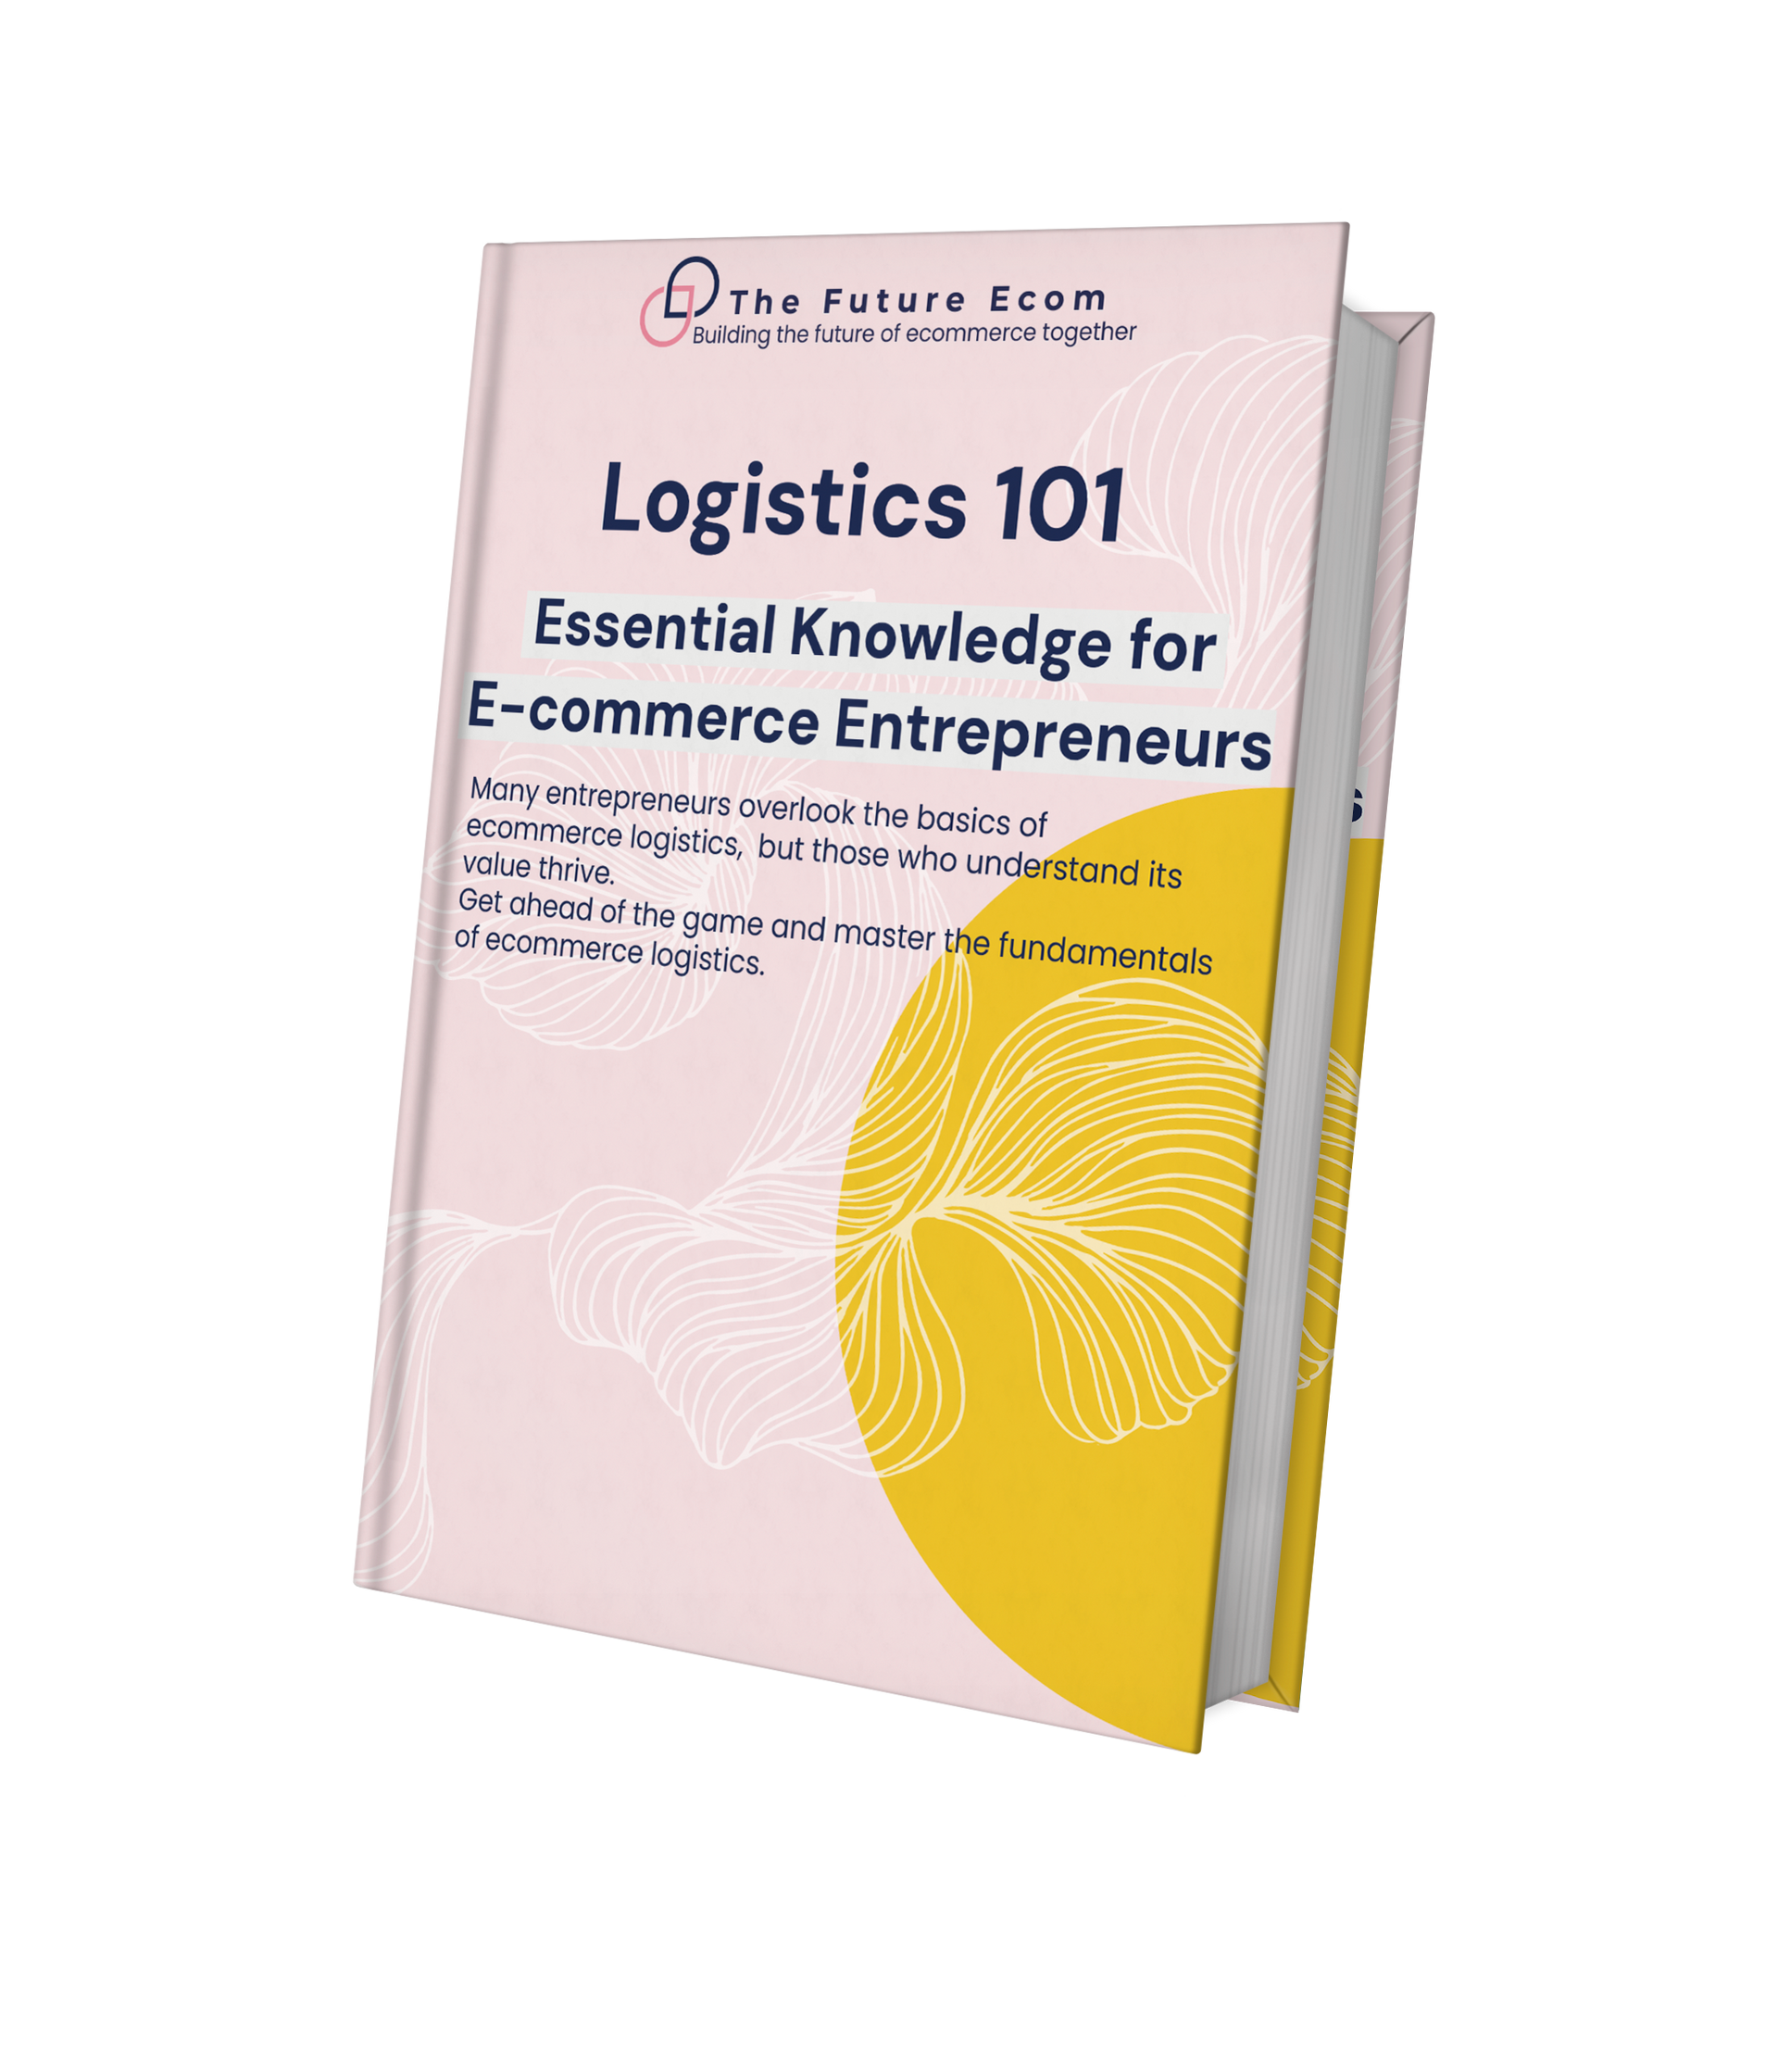 E-book #1: Logistics 101-Essential Knowledge for Ecommerce Entrepreneurs